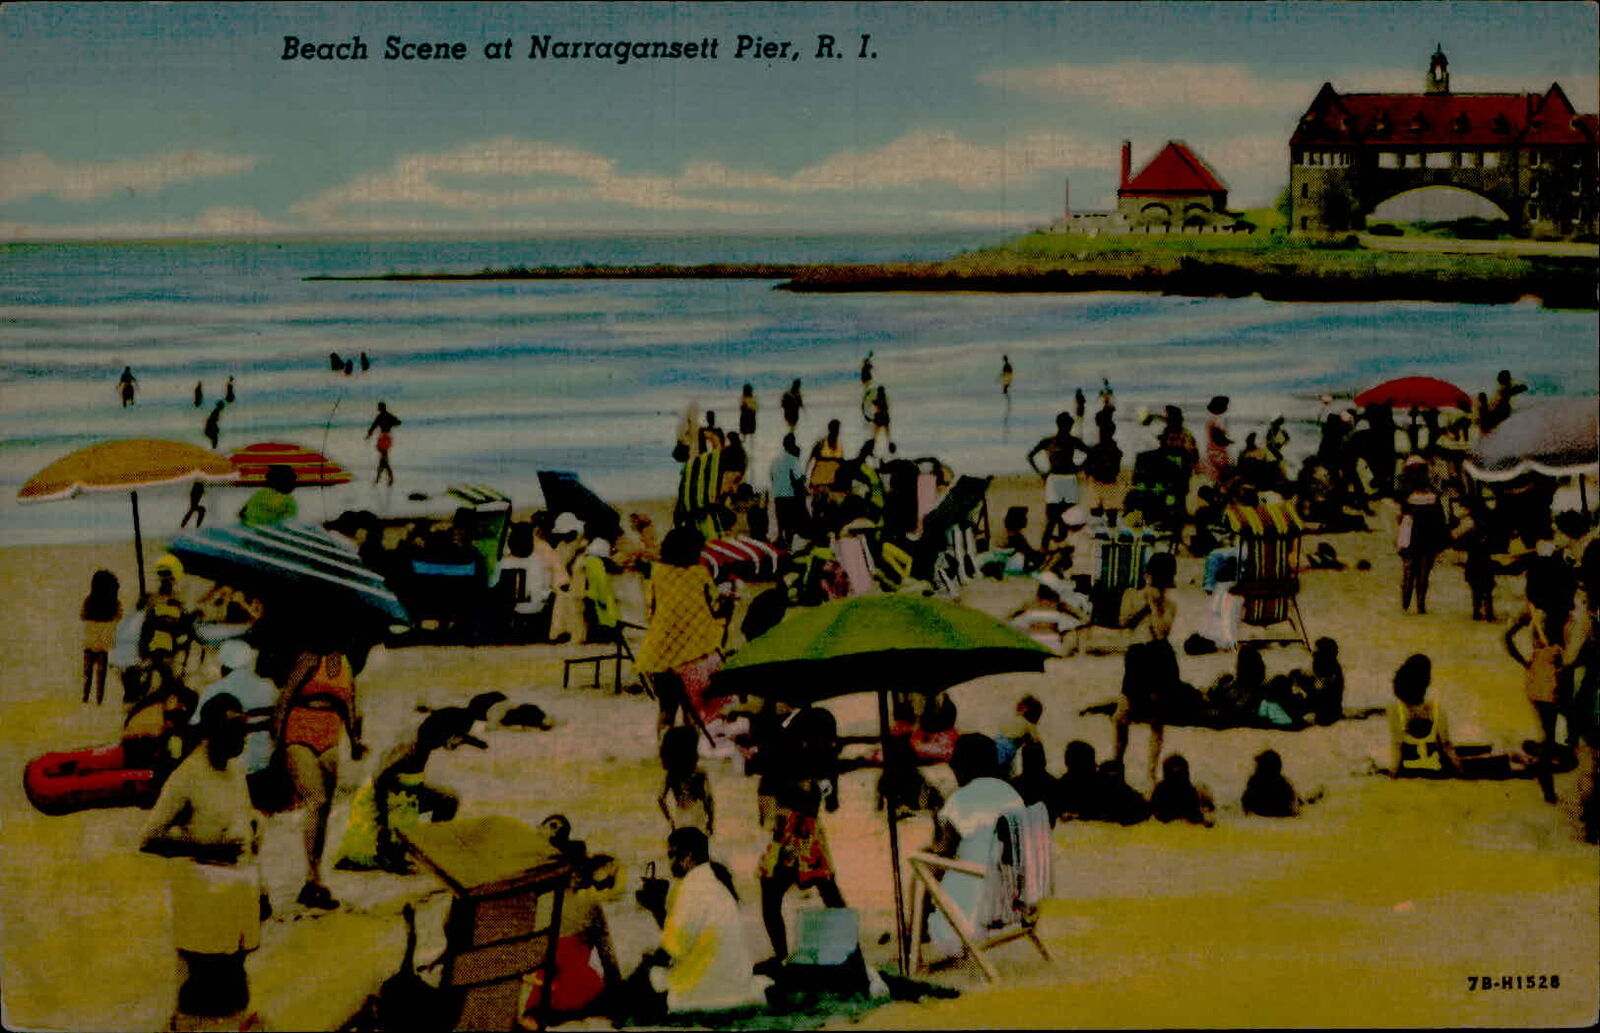 Postcard: Beach Scene at Narragansett Pier, R. I.